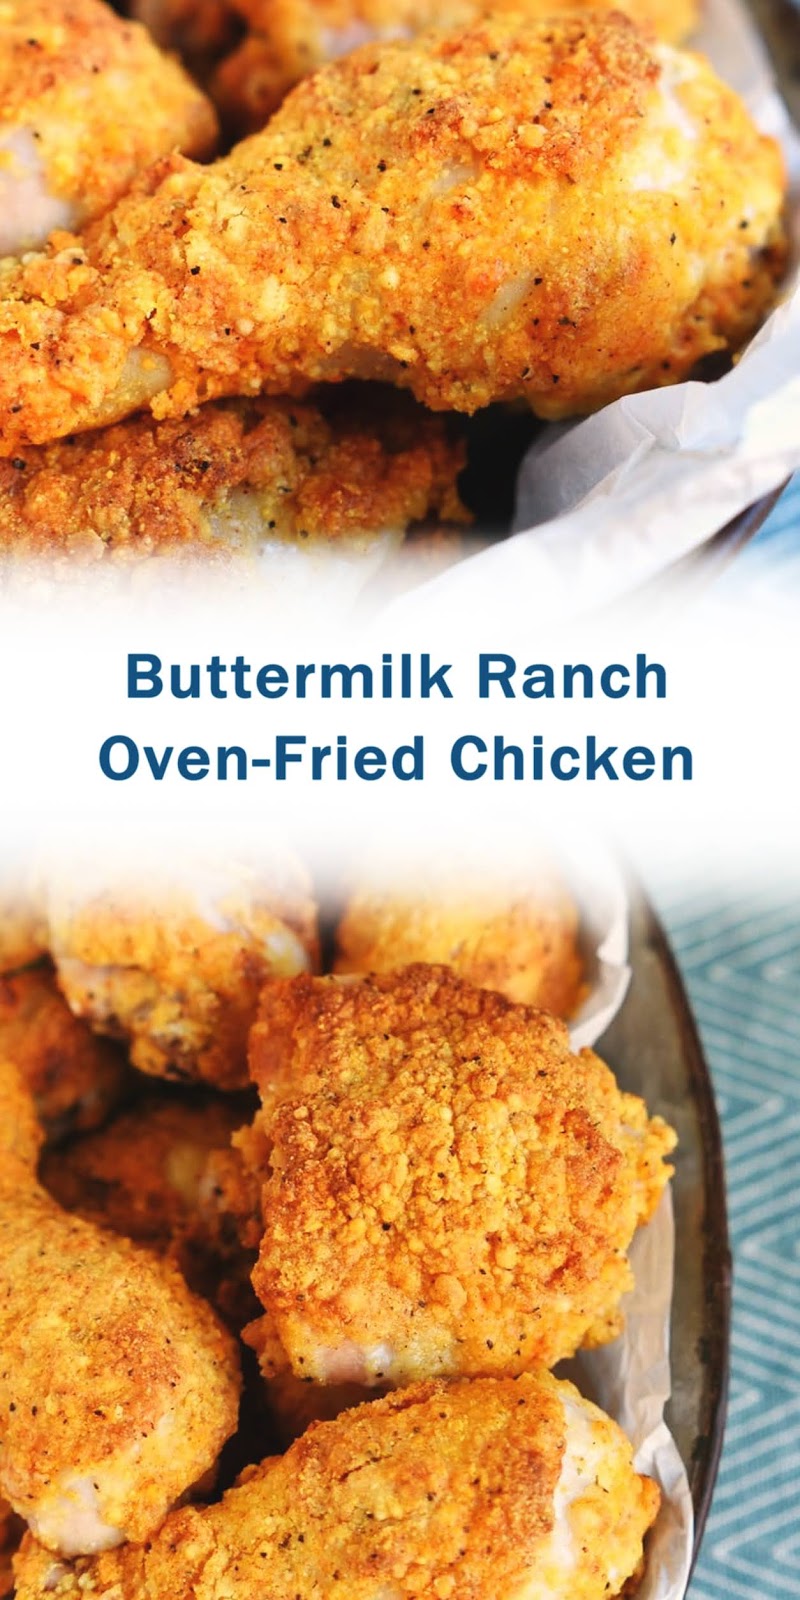 Buttermilk Ranch Oven-Fried Chicken